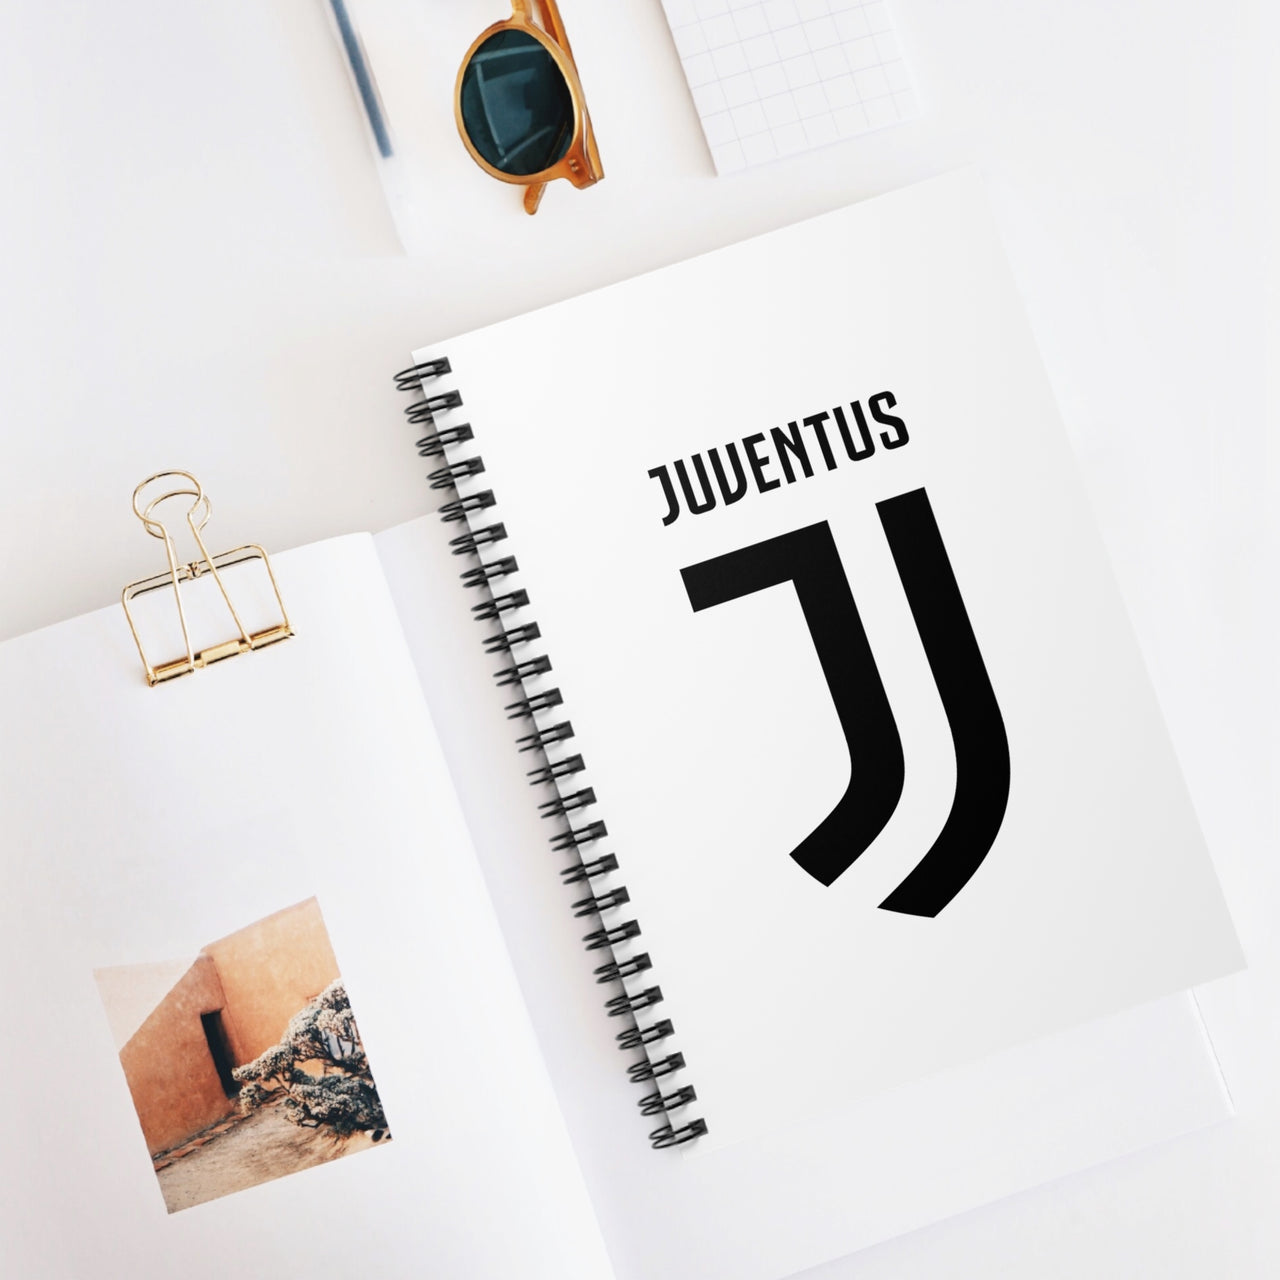 Juventus Spiral Notebook - Ruled Line